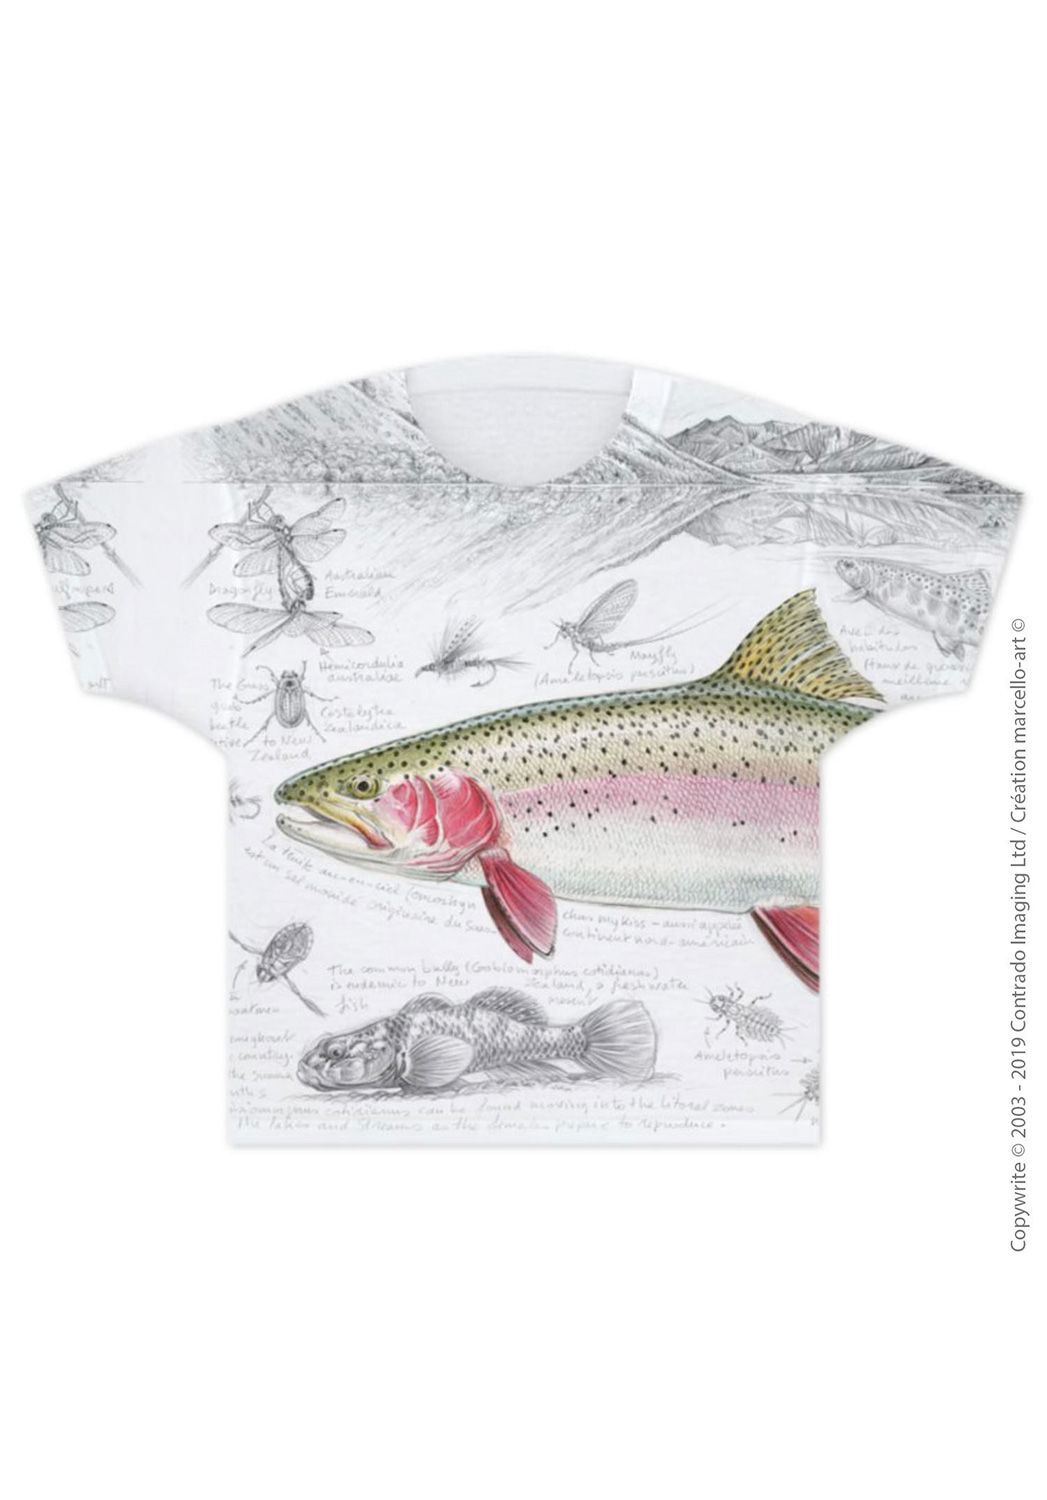 Marcello-art: T-shirt T-shirt 373 Rainbow trout